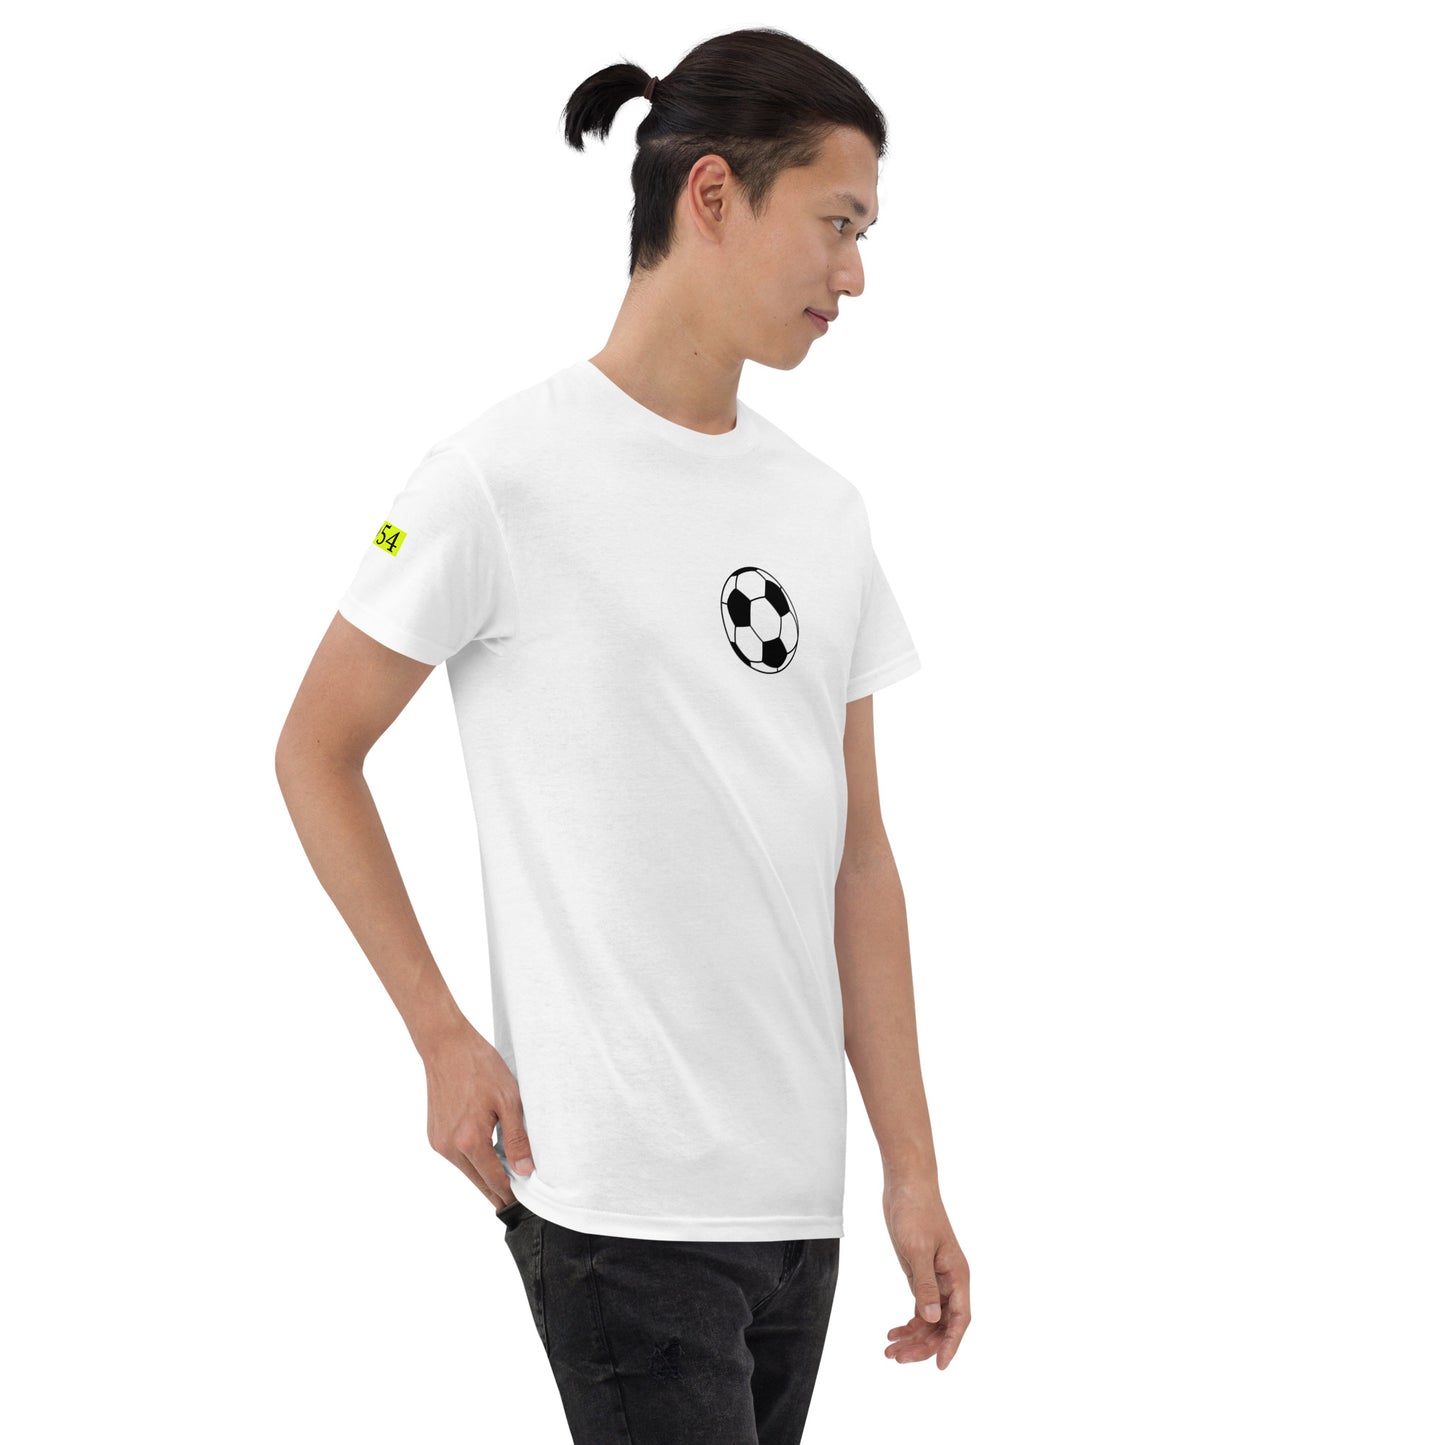 Striker 954 Soccer T-Shirt